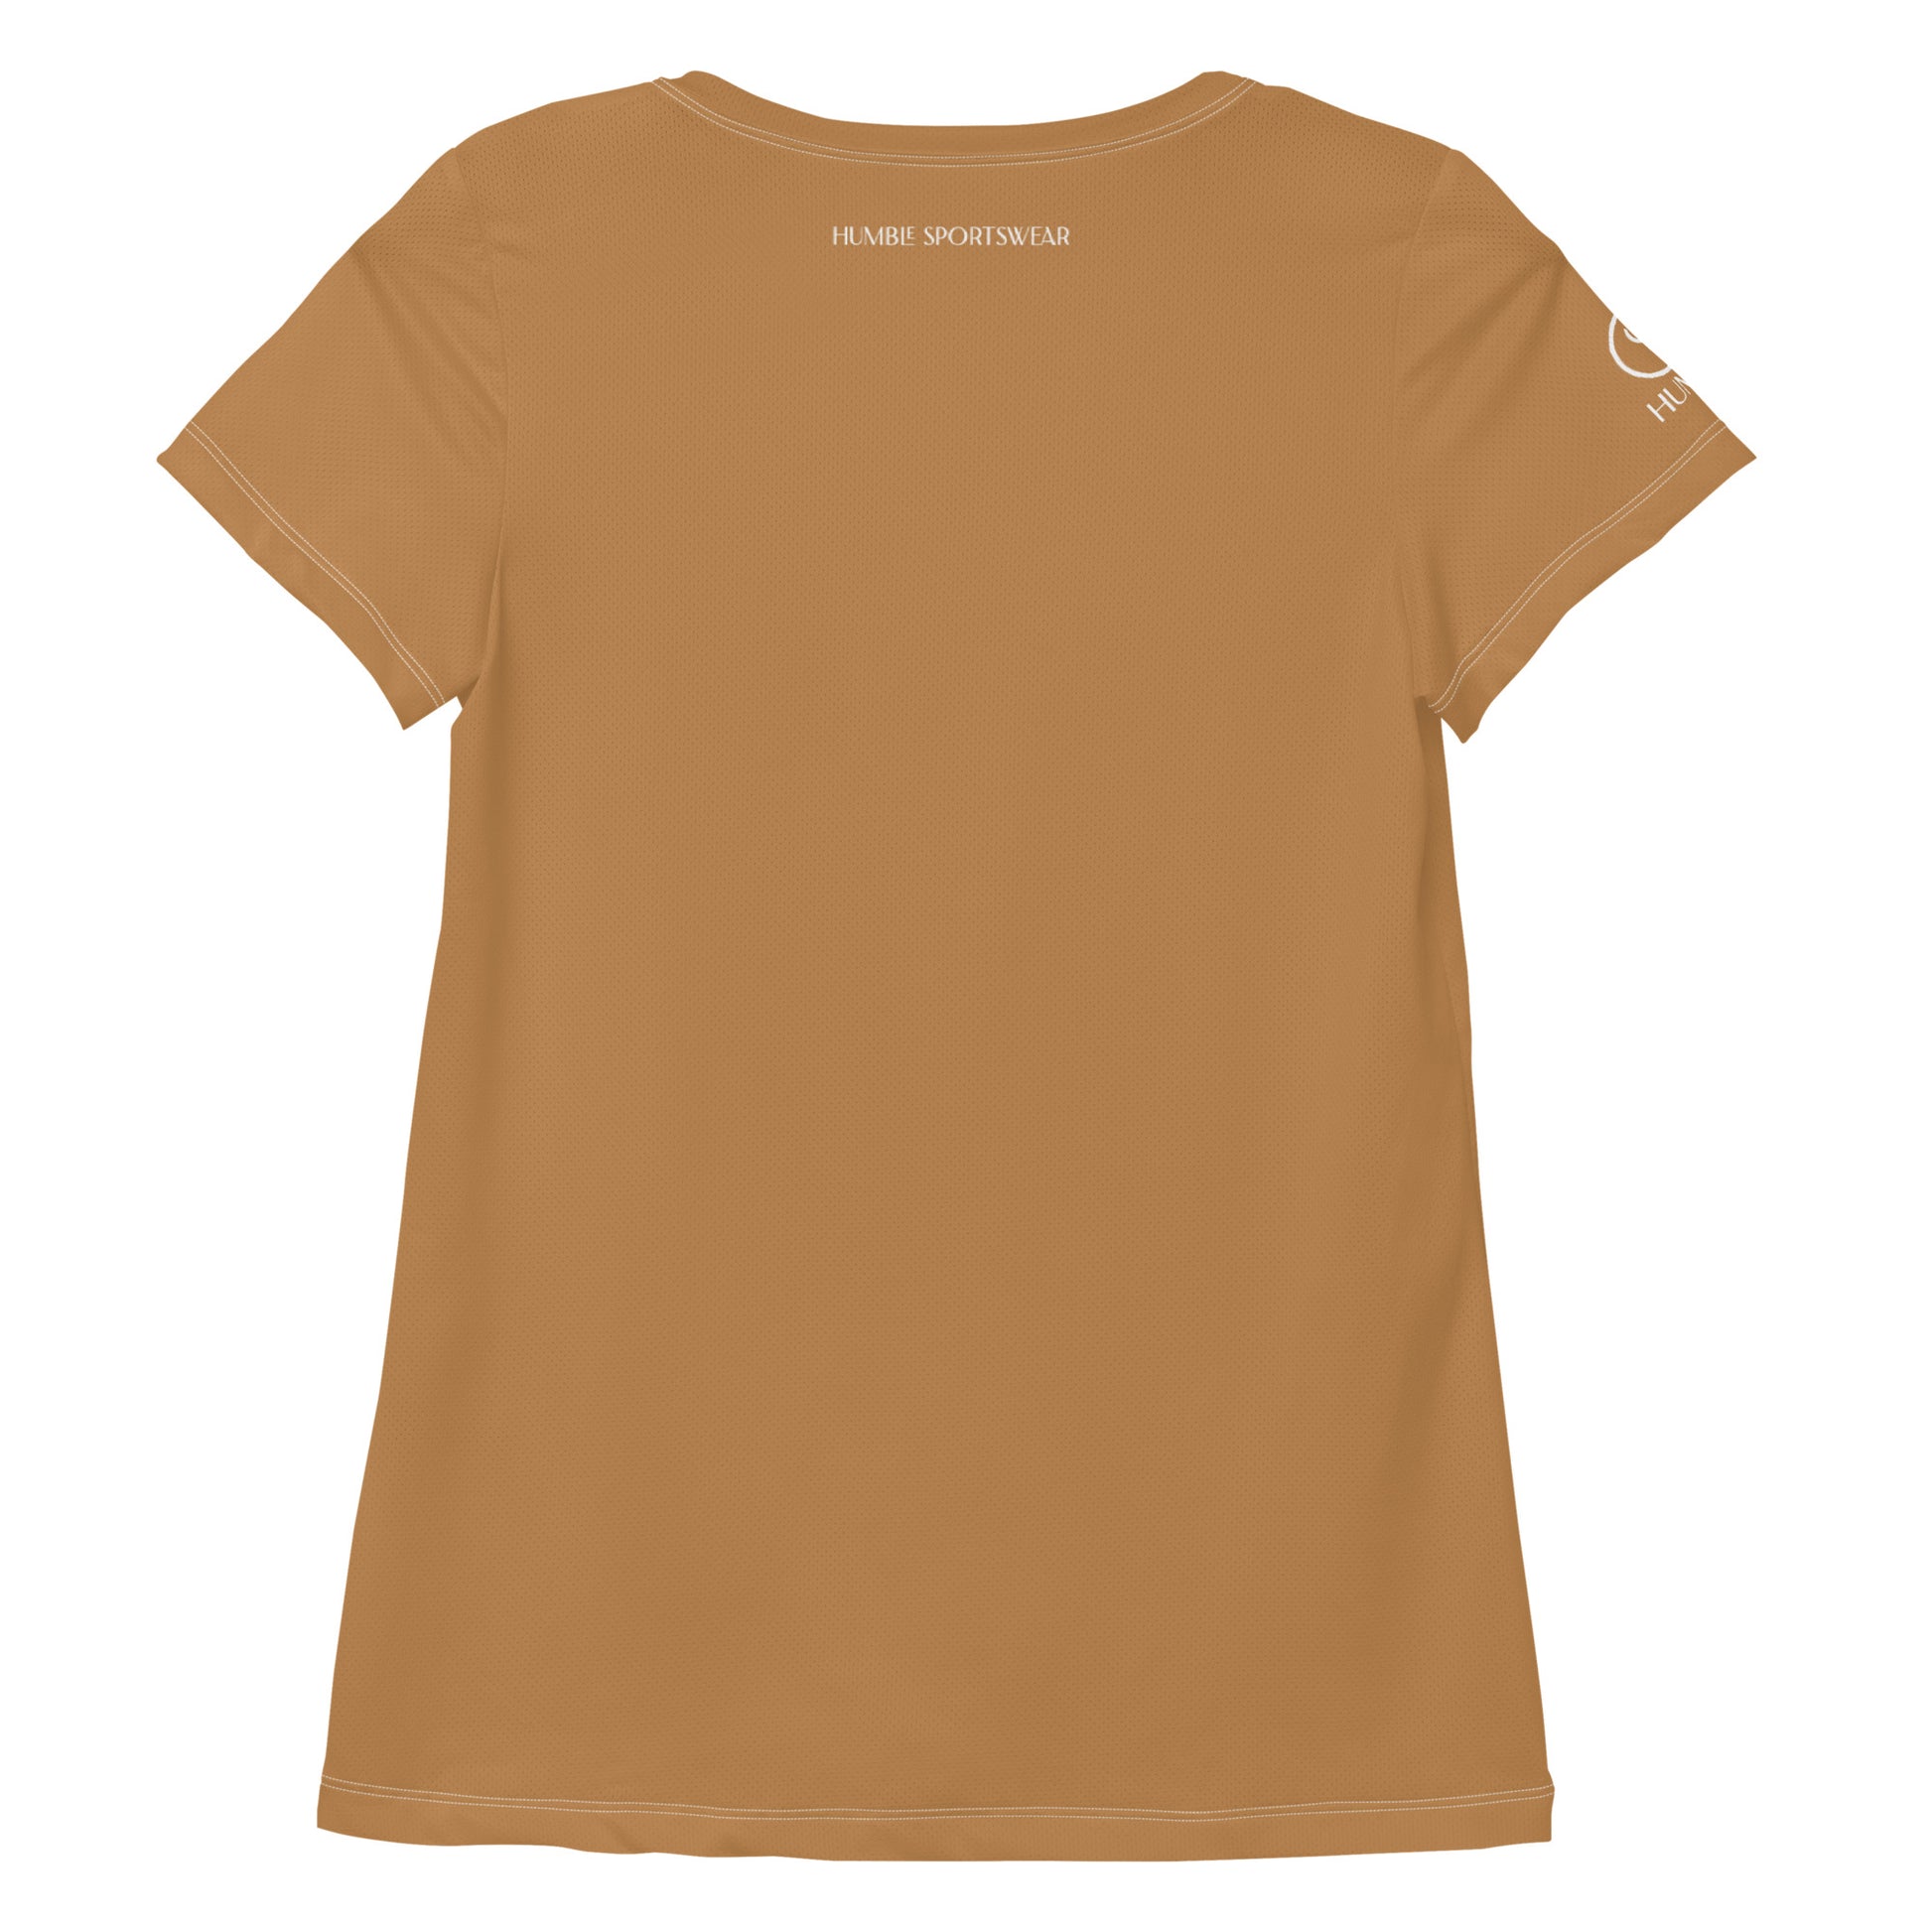 Humble Sportswear, women’s color match t-shirts, women’s shirts, mesh t-shirts for women 